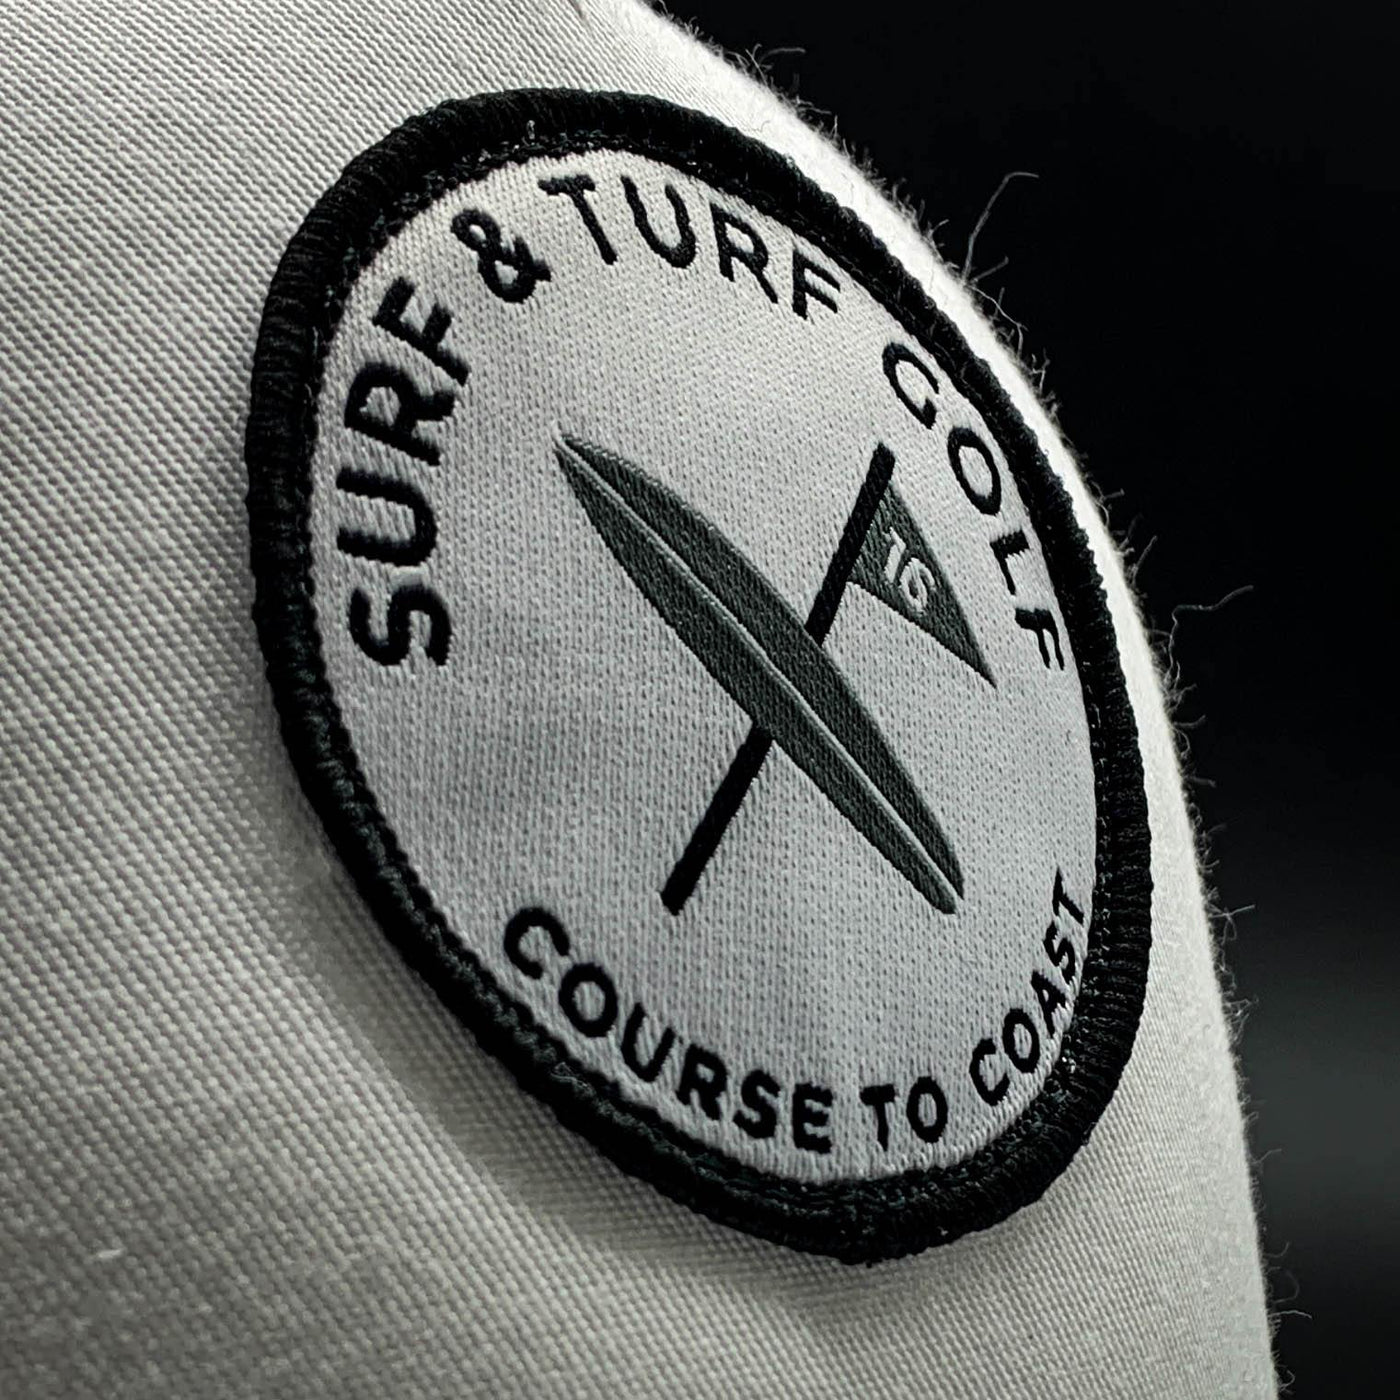 Course to Coast 2 - Surf & Turf Golf